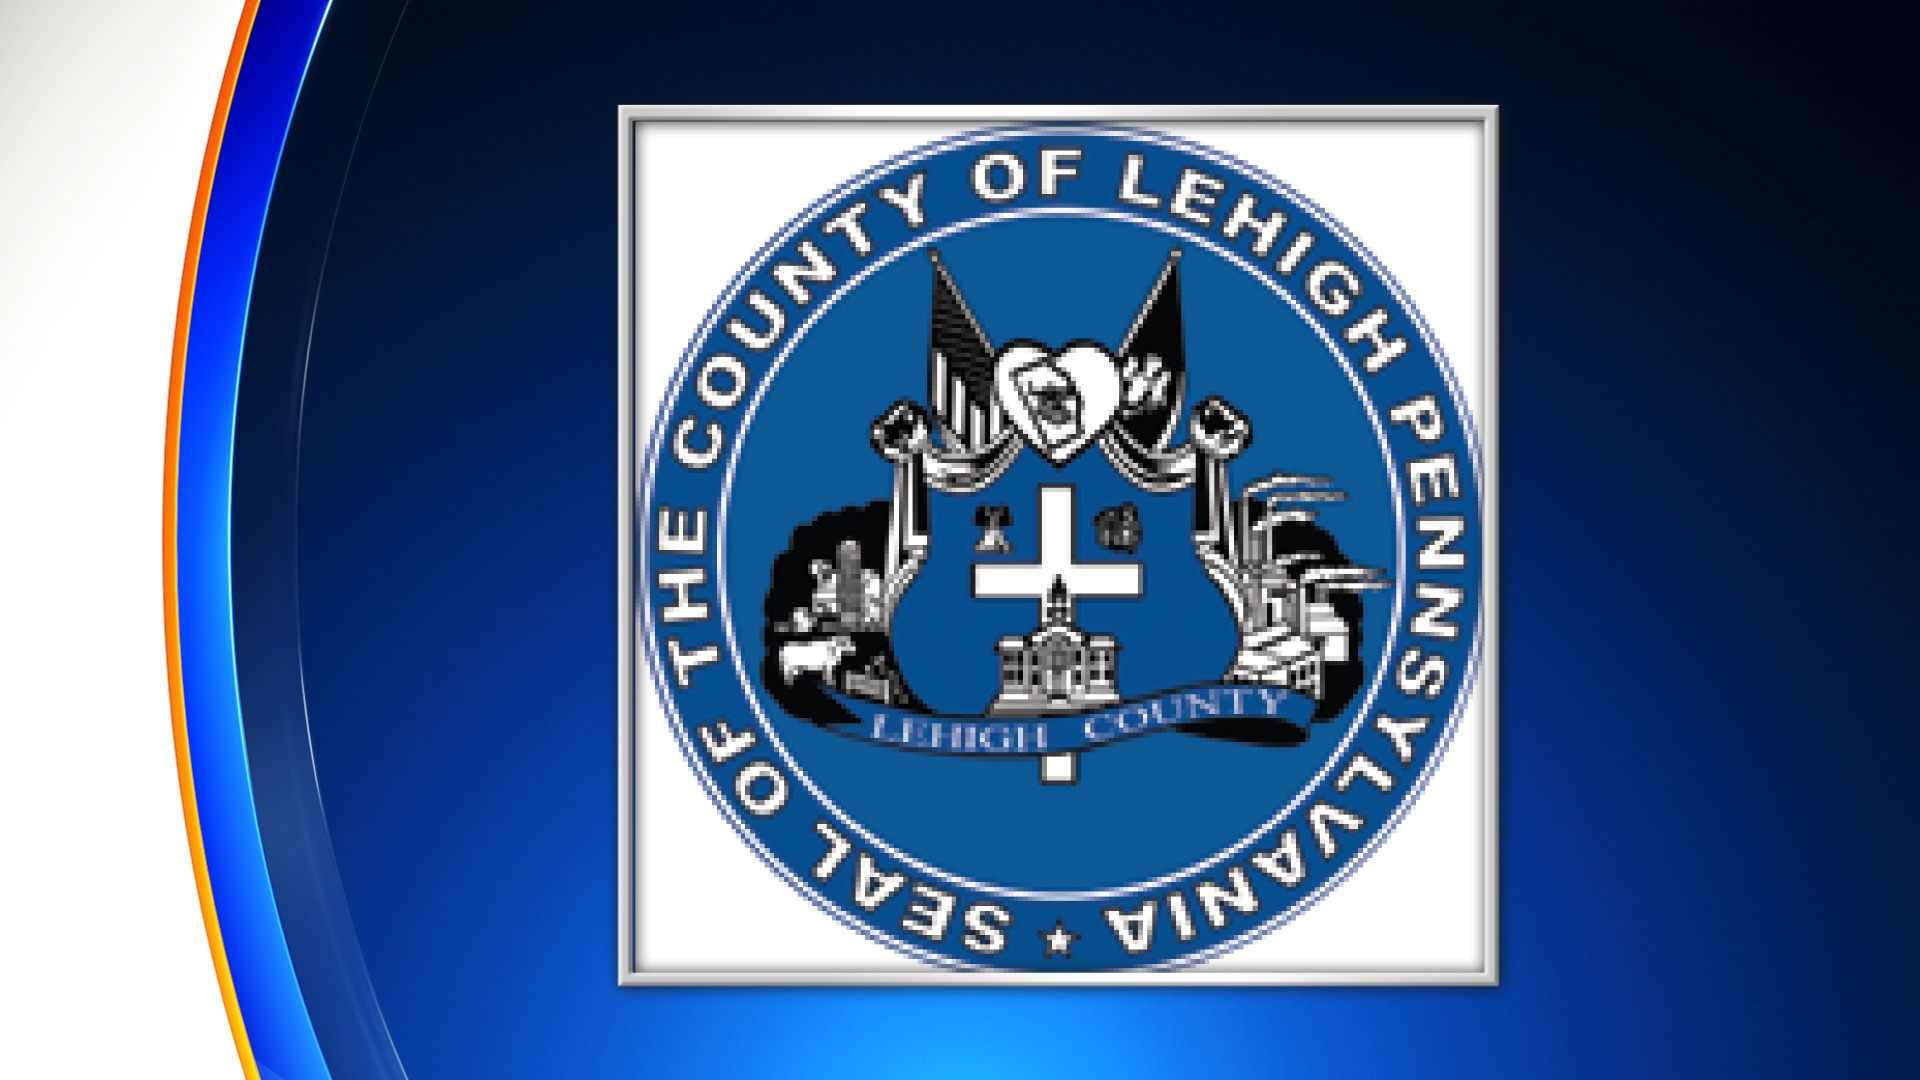 Lehigh County seal